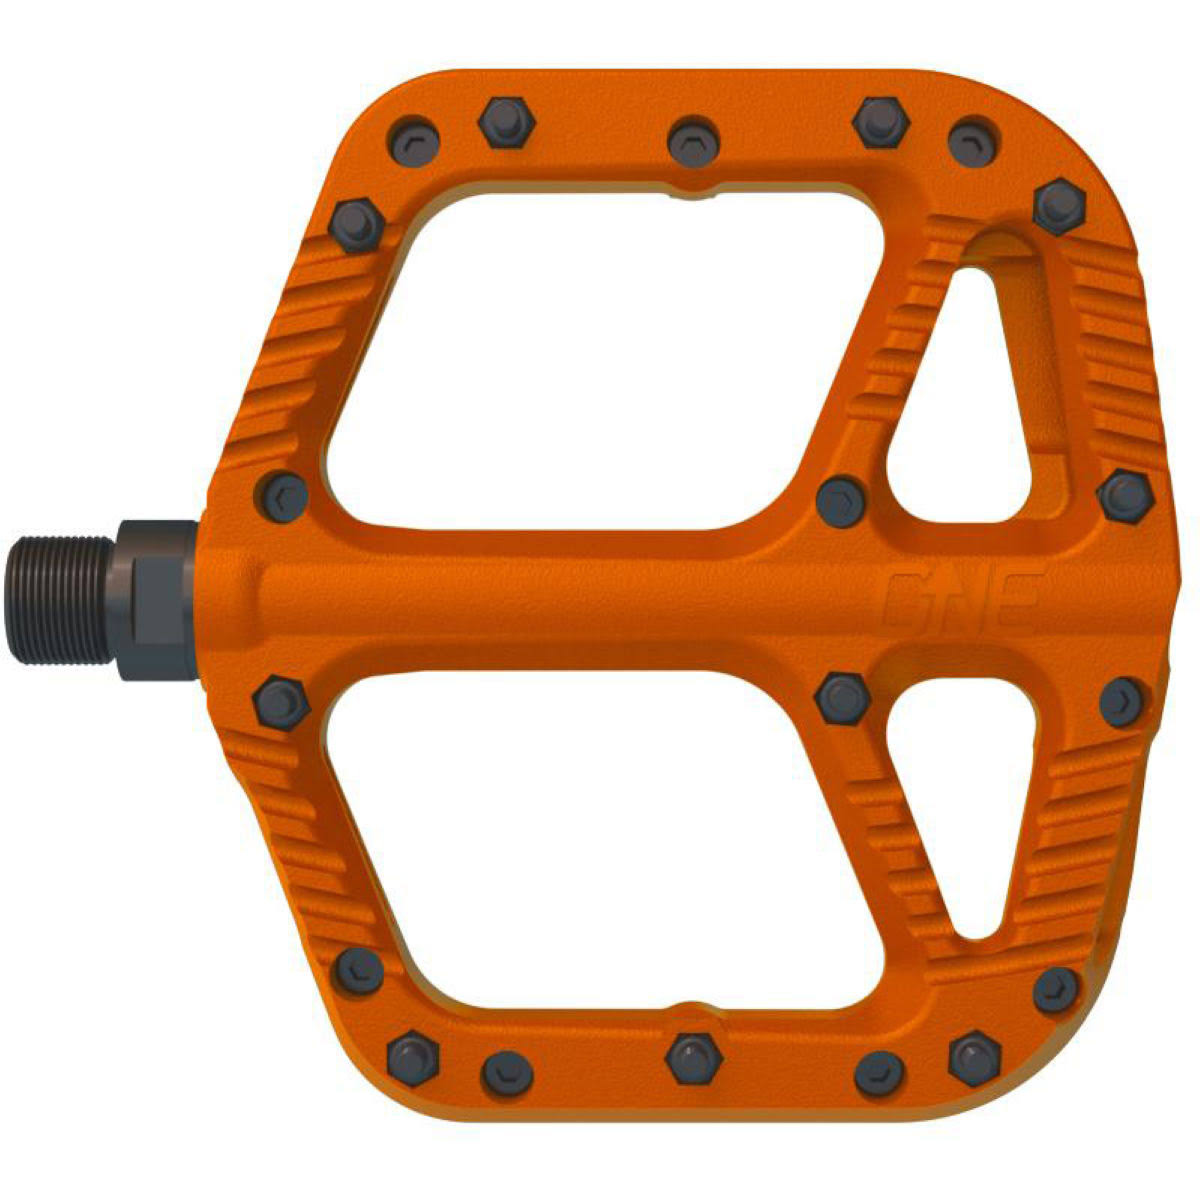 OneUp Components Composite Pedals Orange